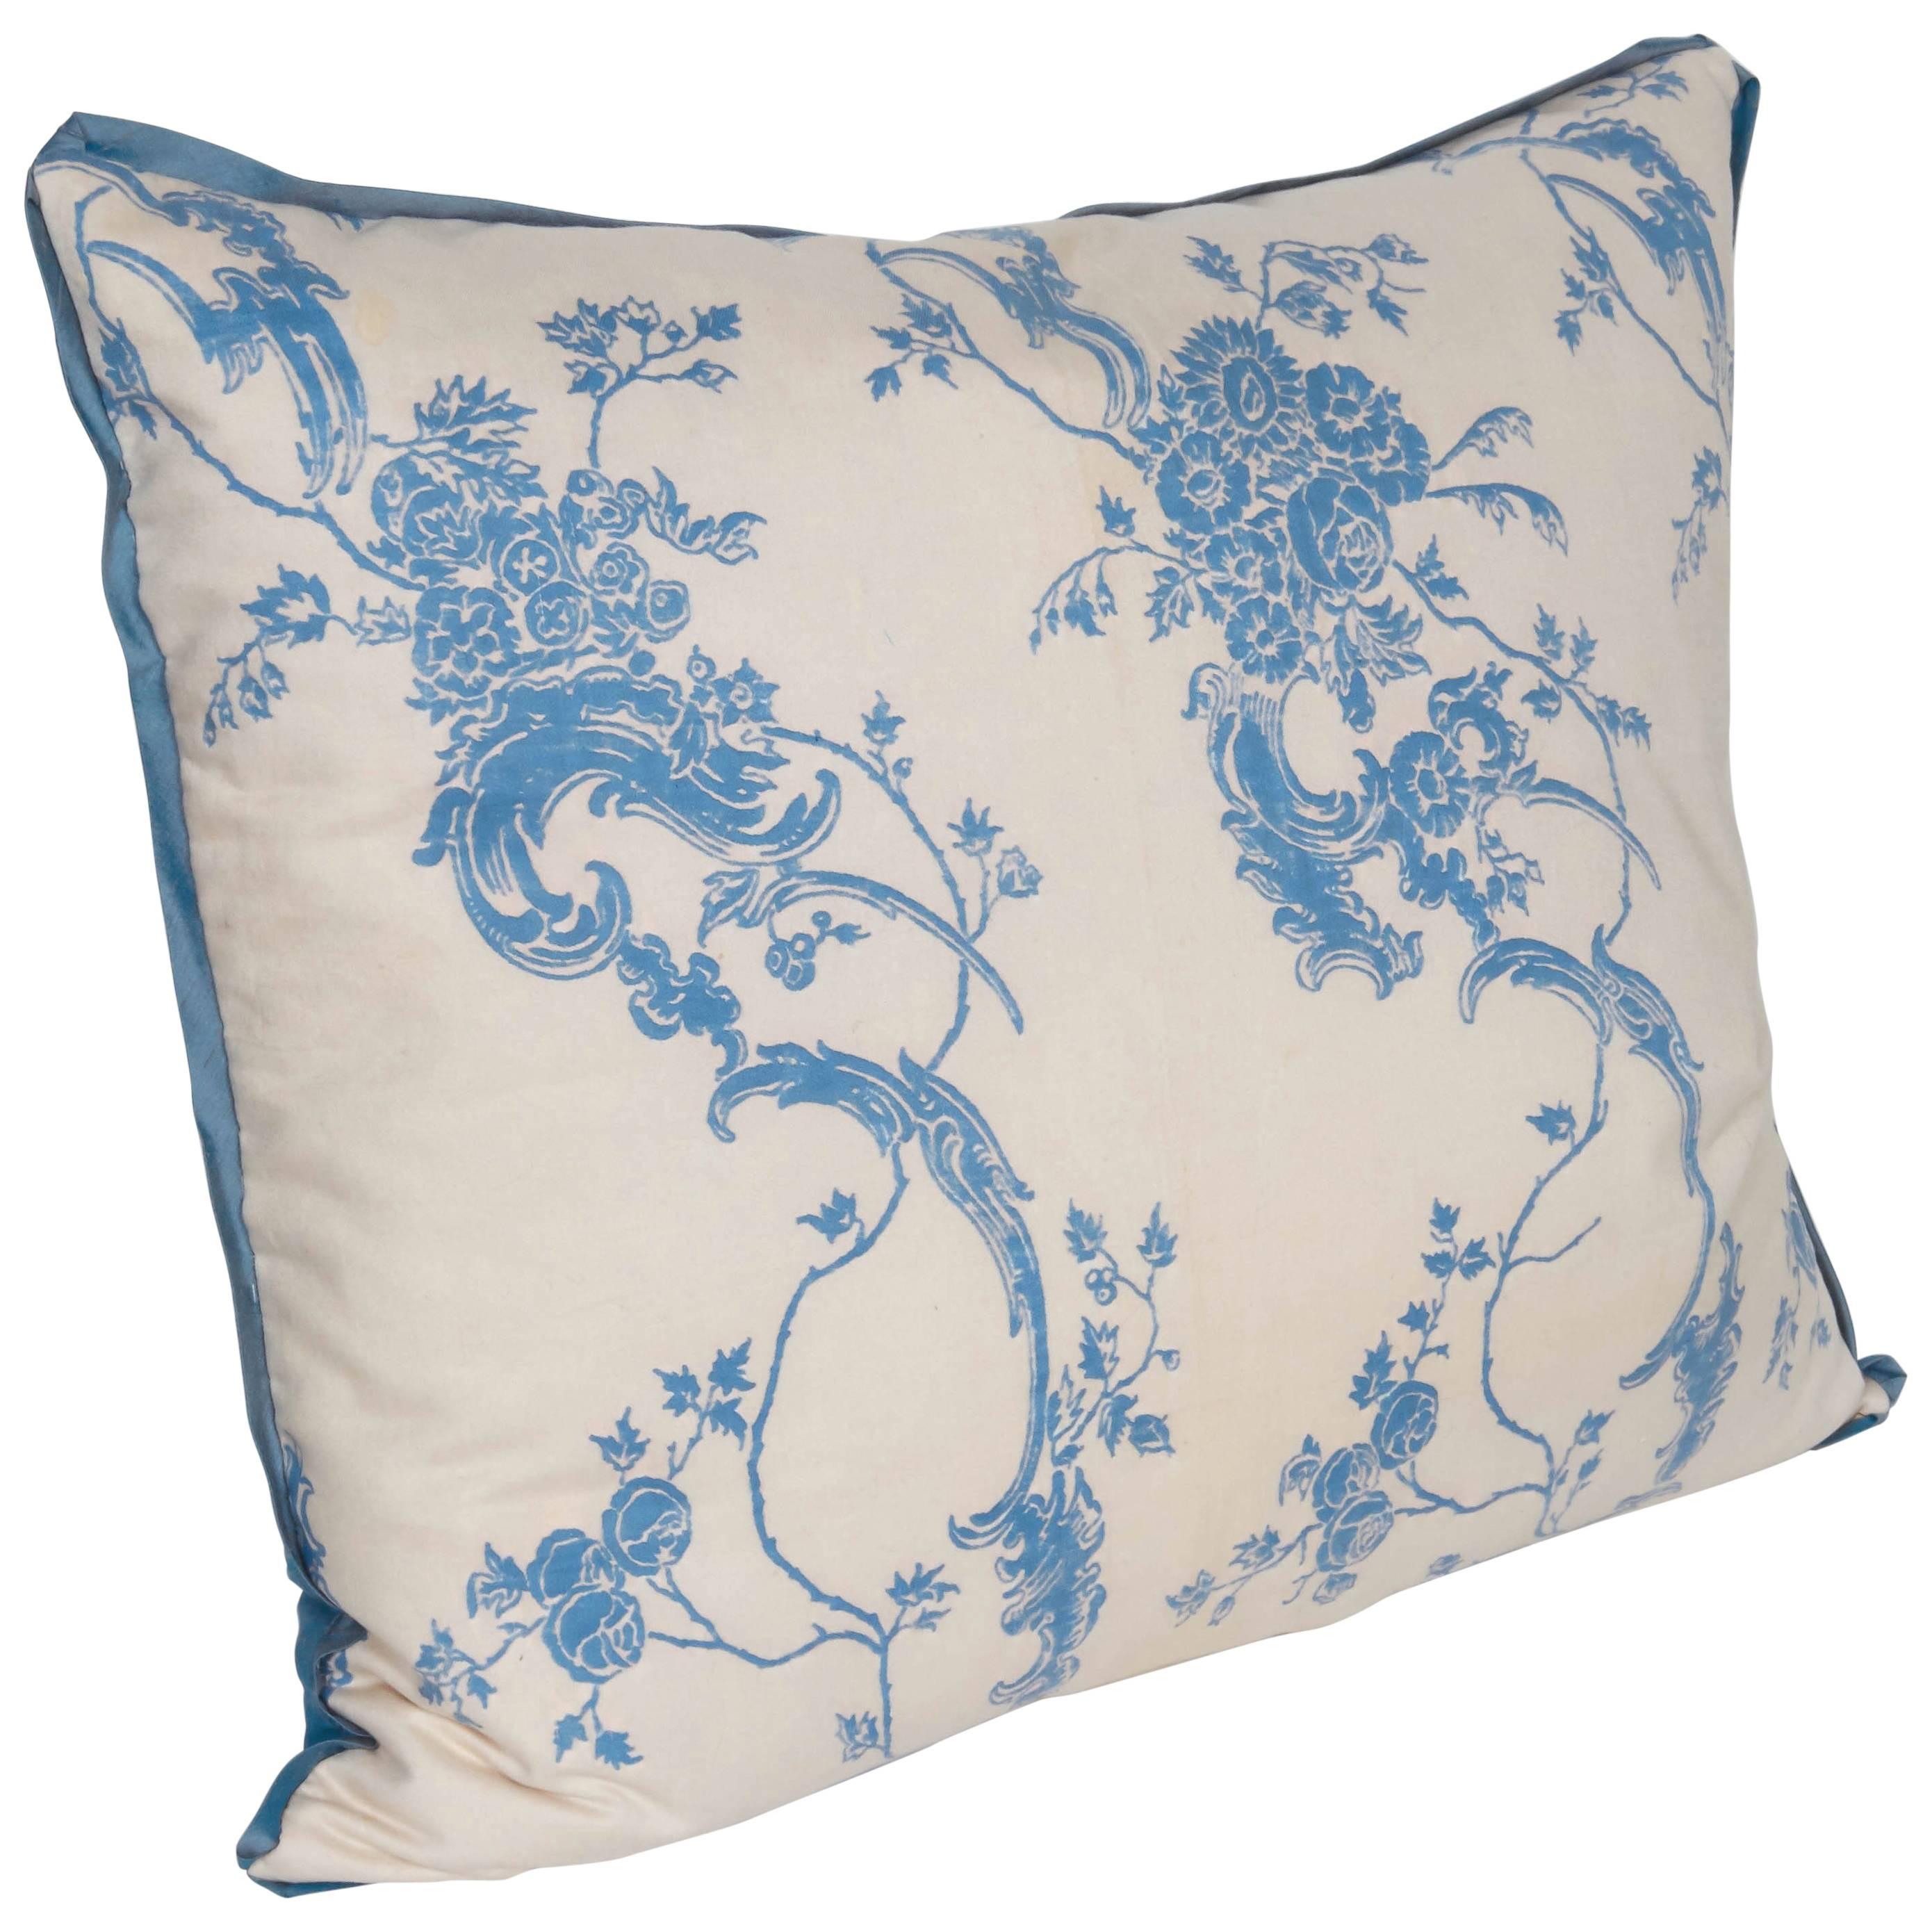 A Fortuny Fabric Cushion in the Venezianina Pattern